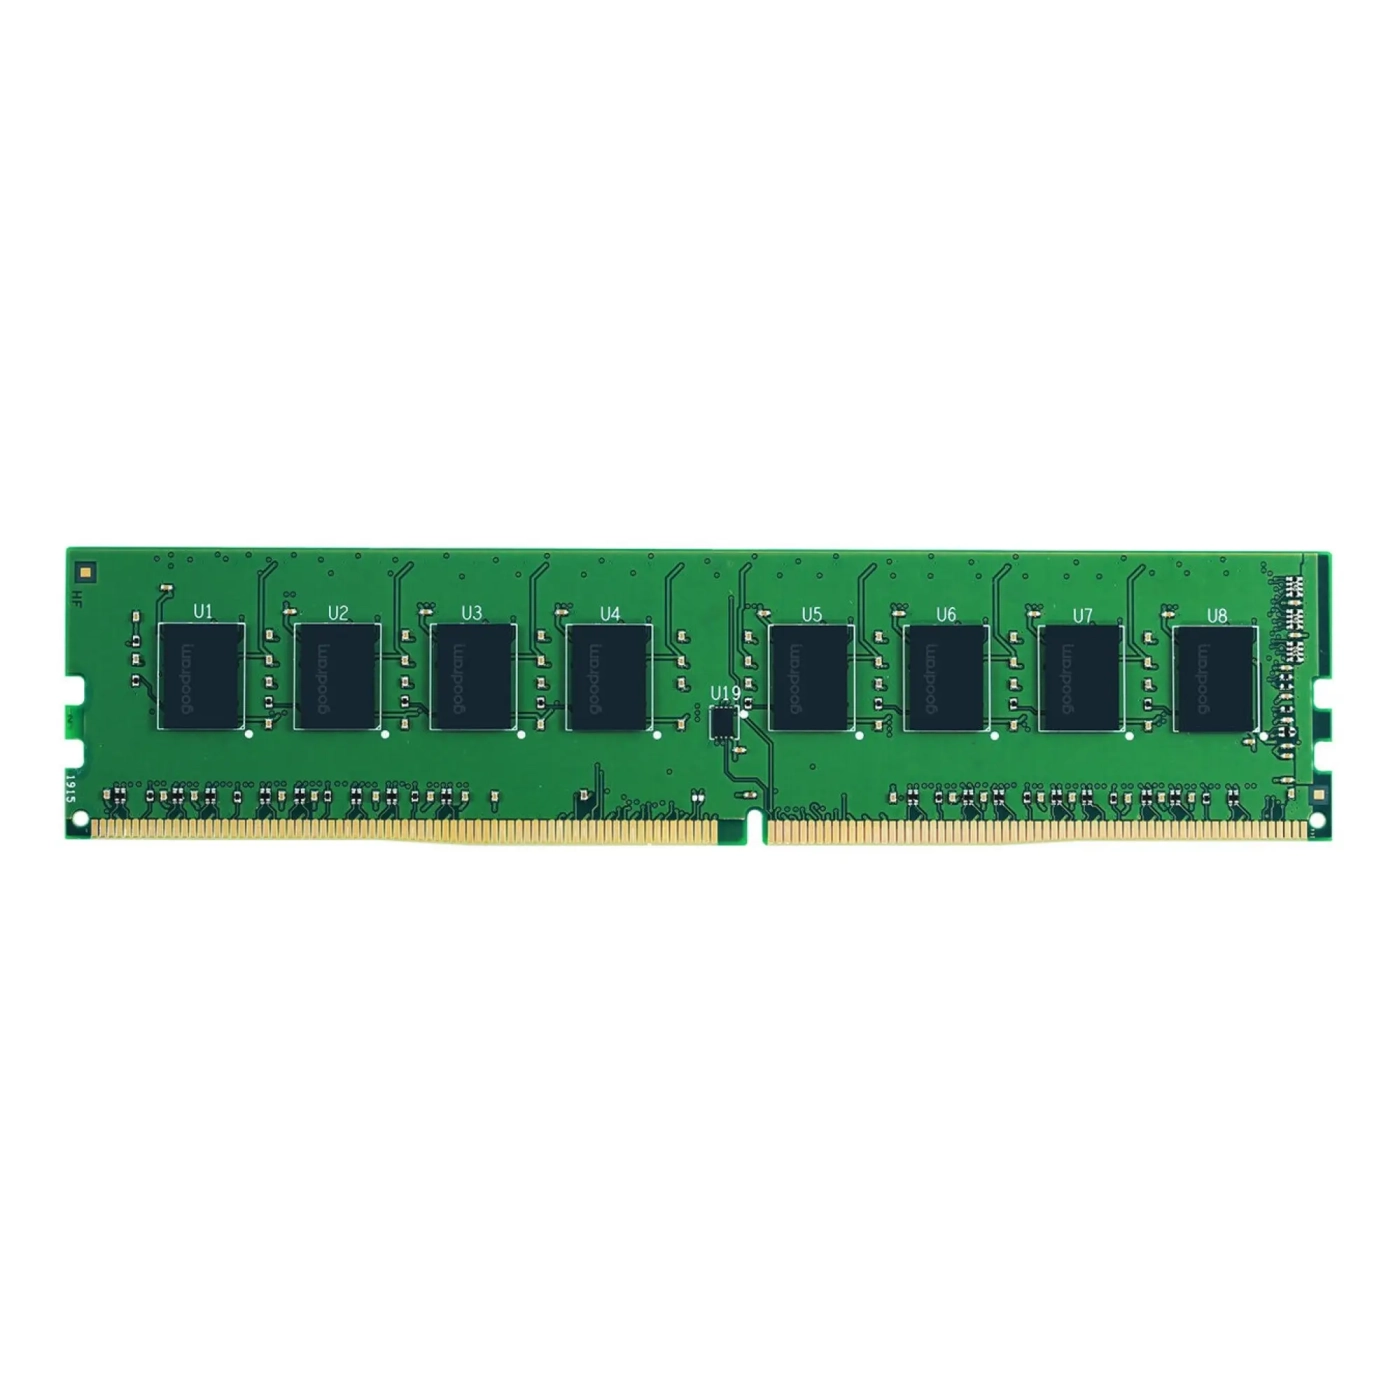 Купить Модуль памяти Goodram DDR4-3200 16GB (GR3200D464L22/16G) - фото 1